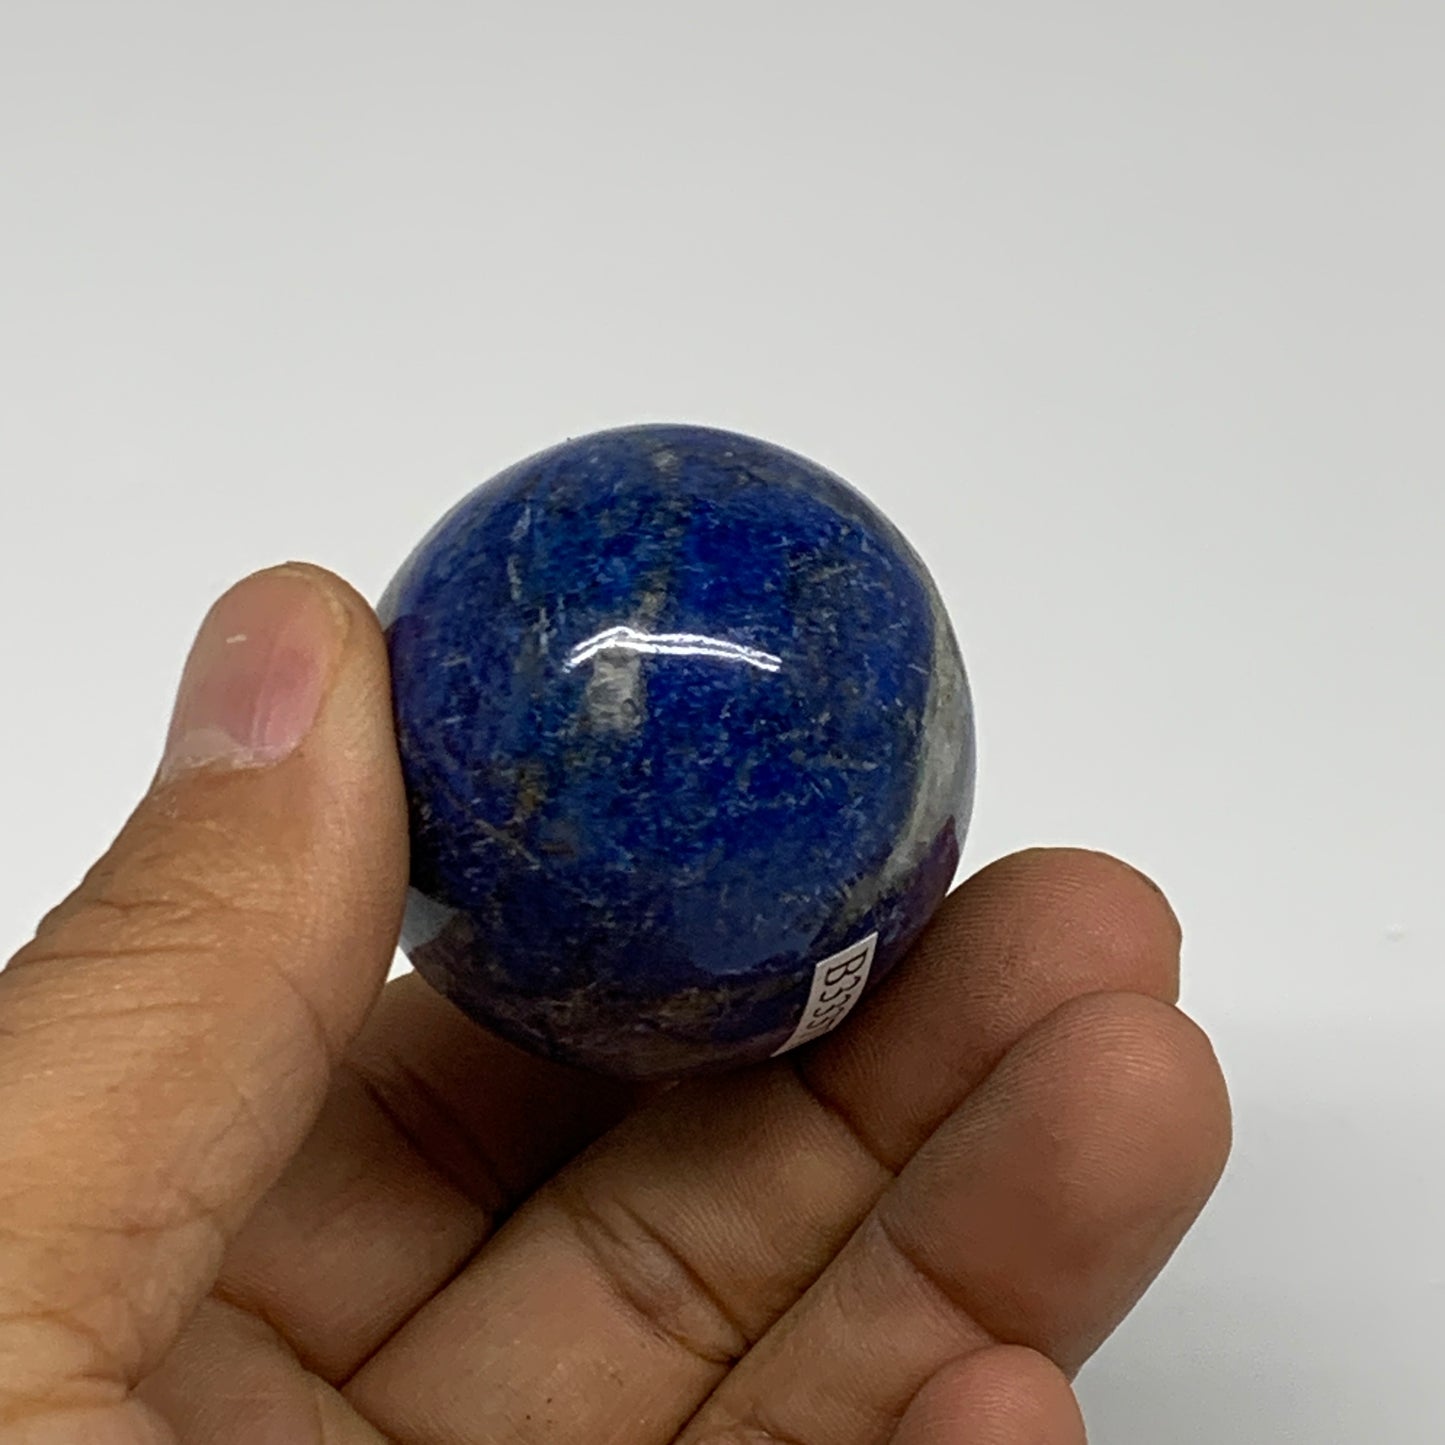 124.5g, 2.1"x1.5", Natural Lapis Lazuli Egg Polished, Clearance, B33371